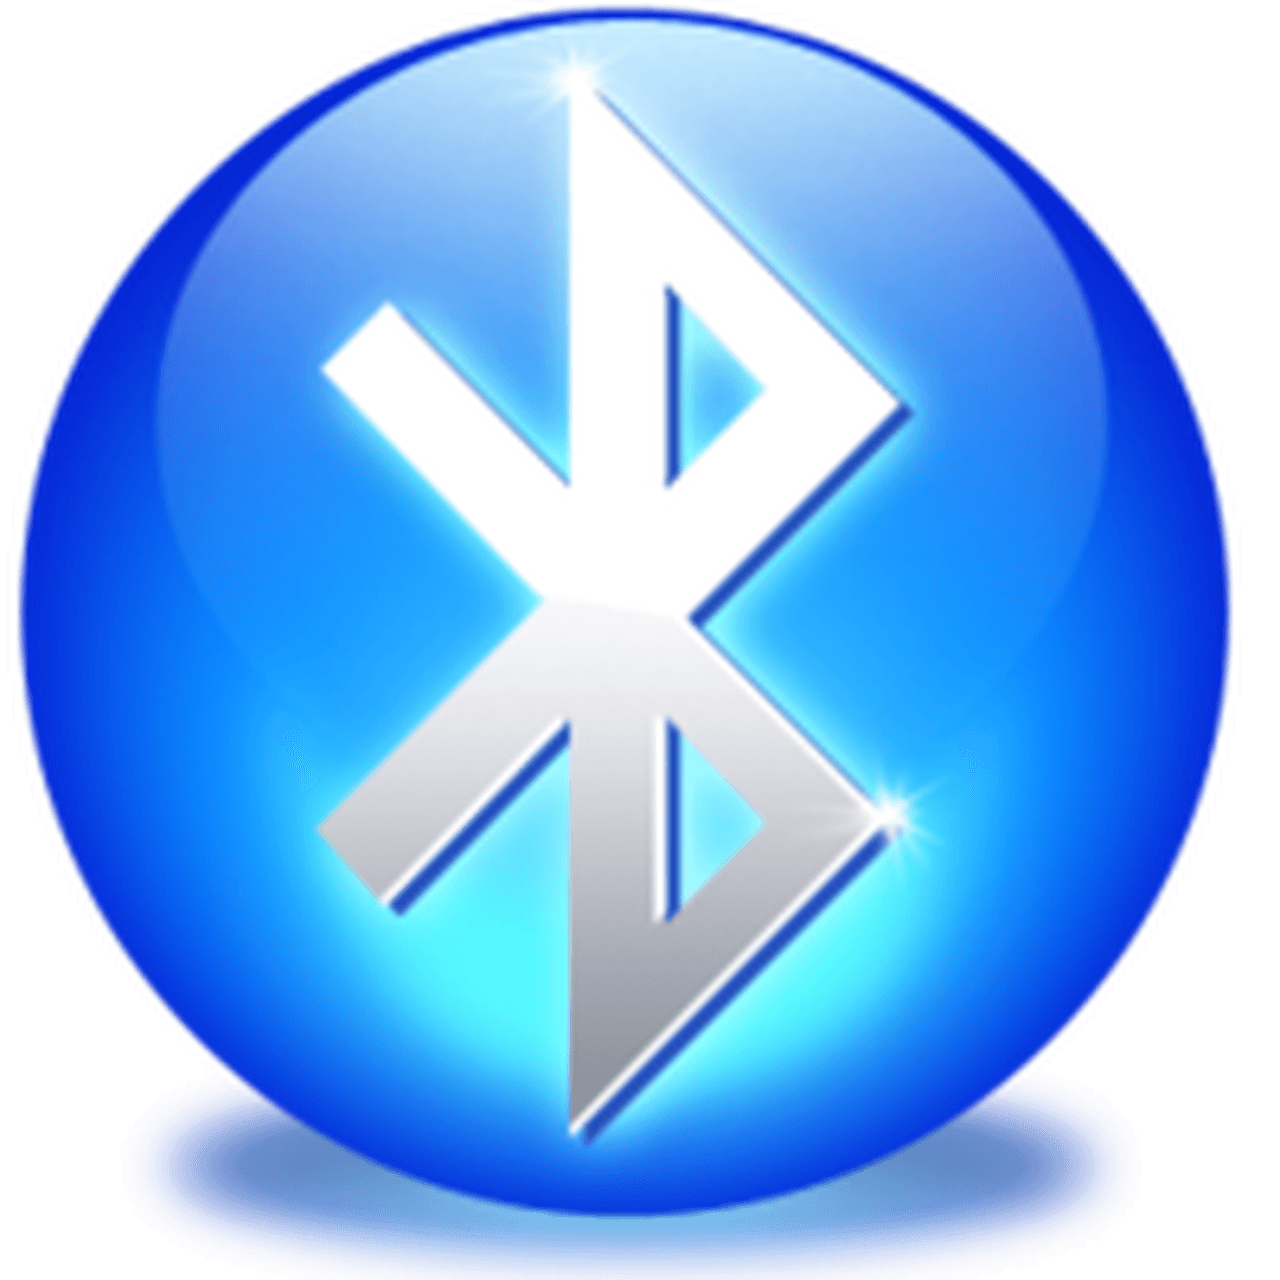 Bluetooth transparant